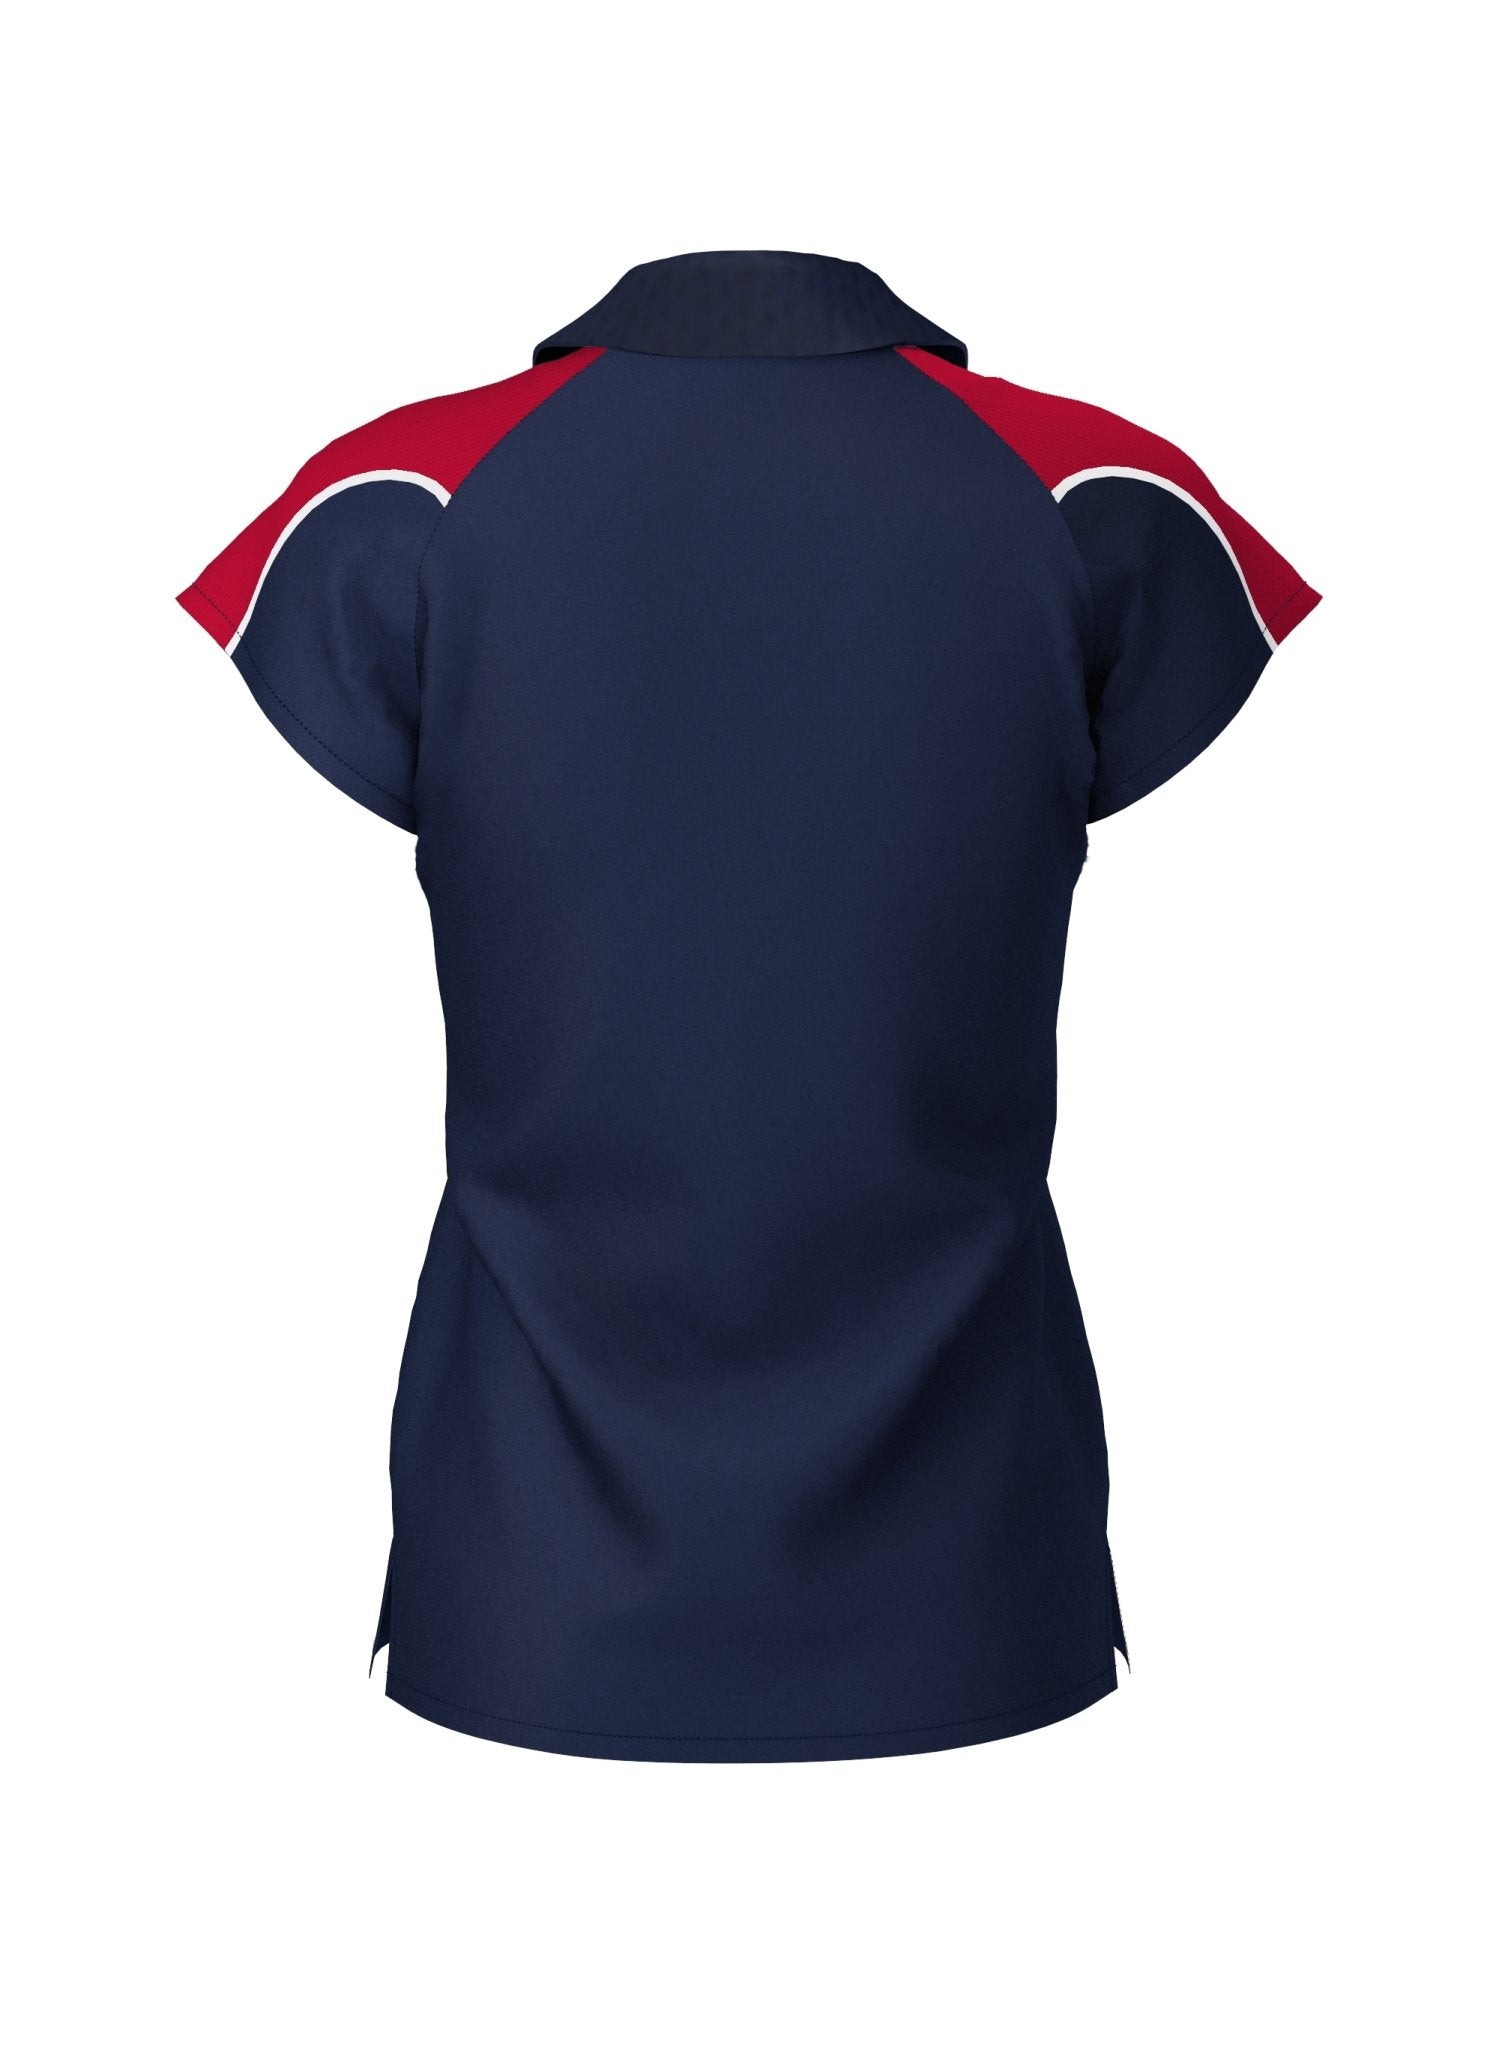 LWL Women's Polo Shirt - Fuel Sports